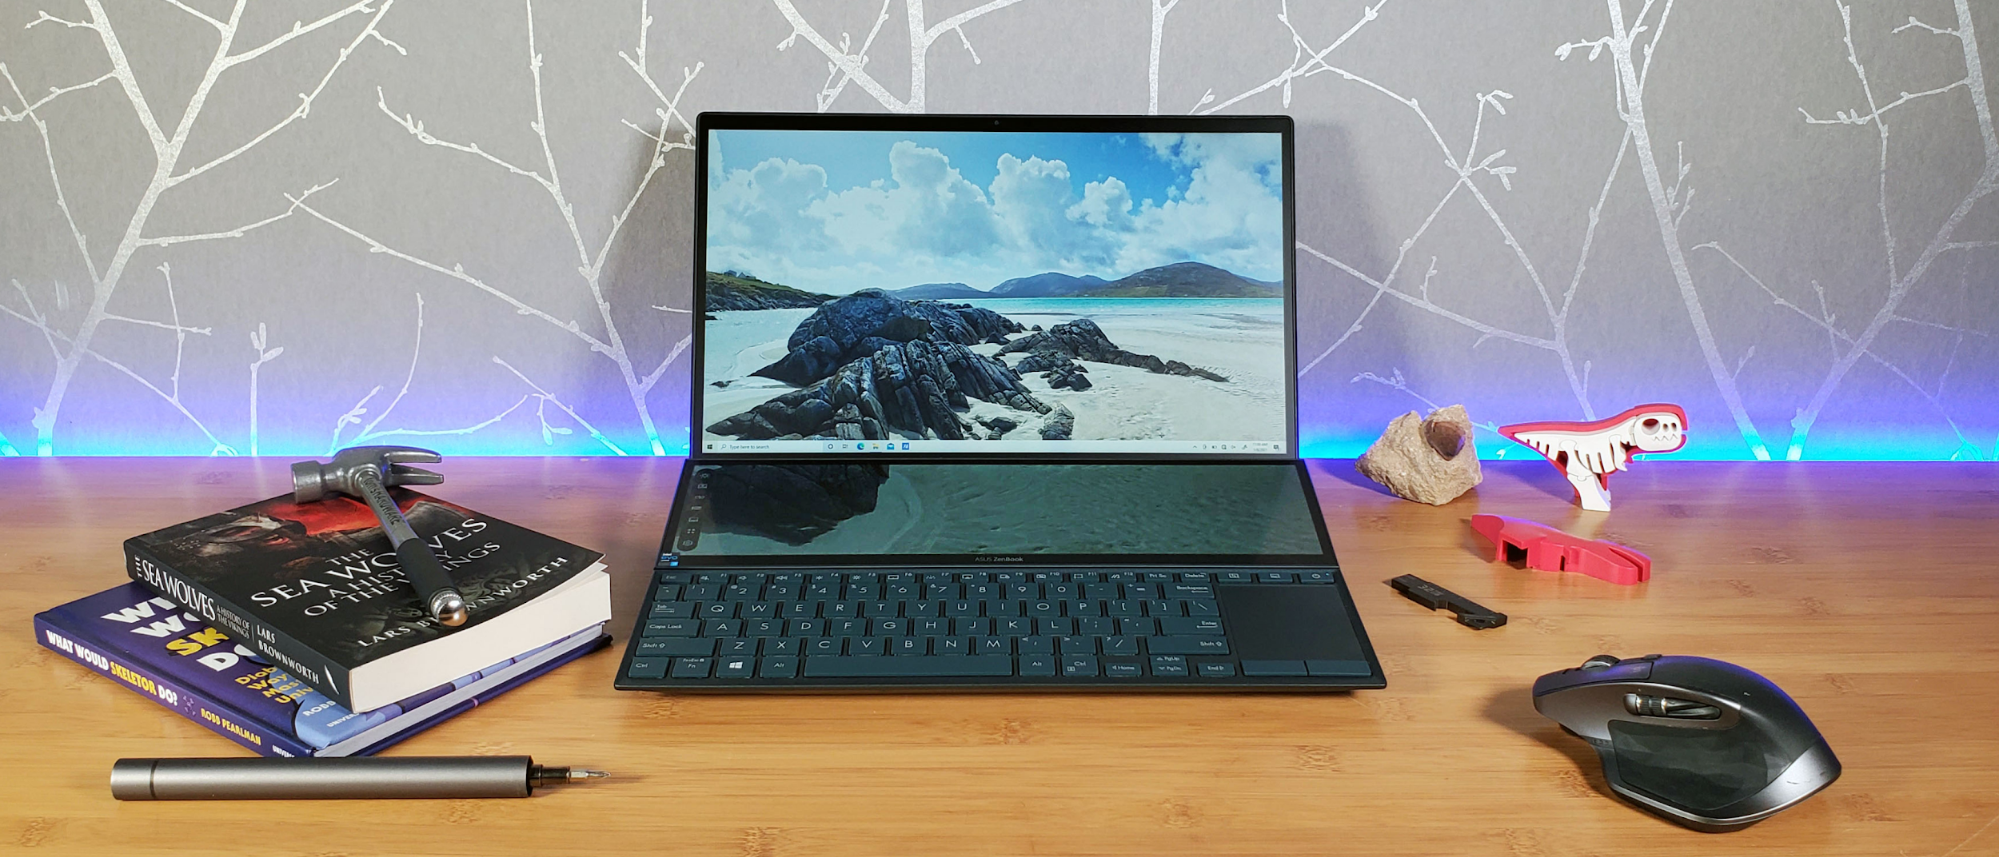 Asus ZenBook Duo 14 UX482 Review: Dual-Screen Refinement | Tom's Hardware